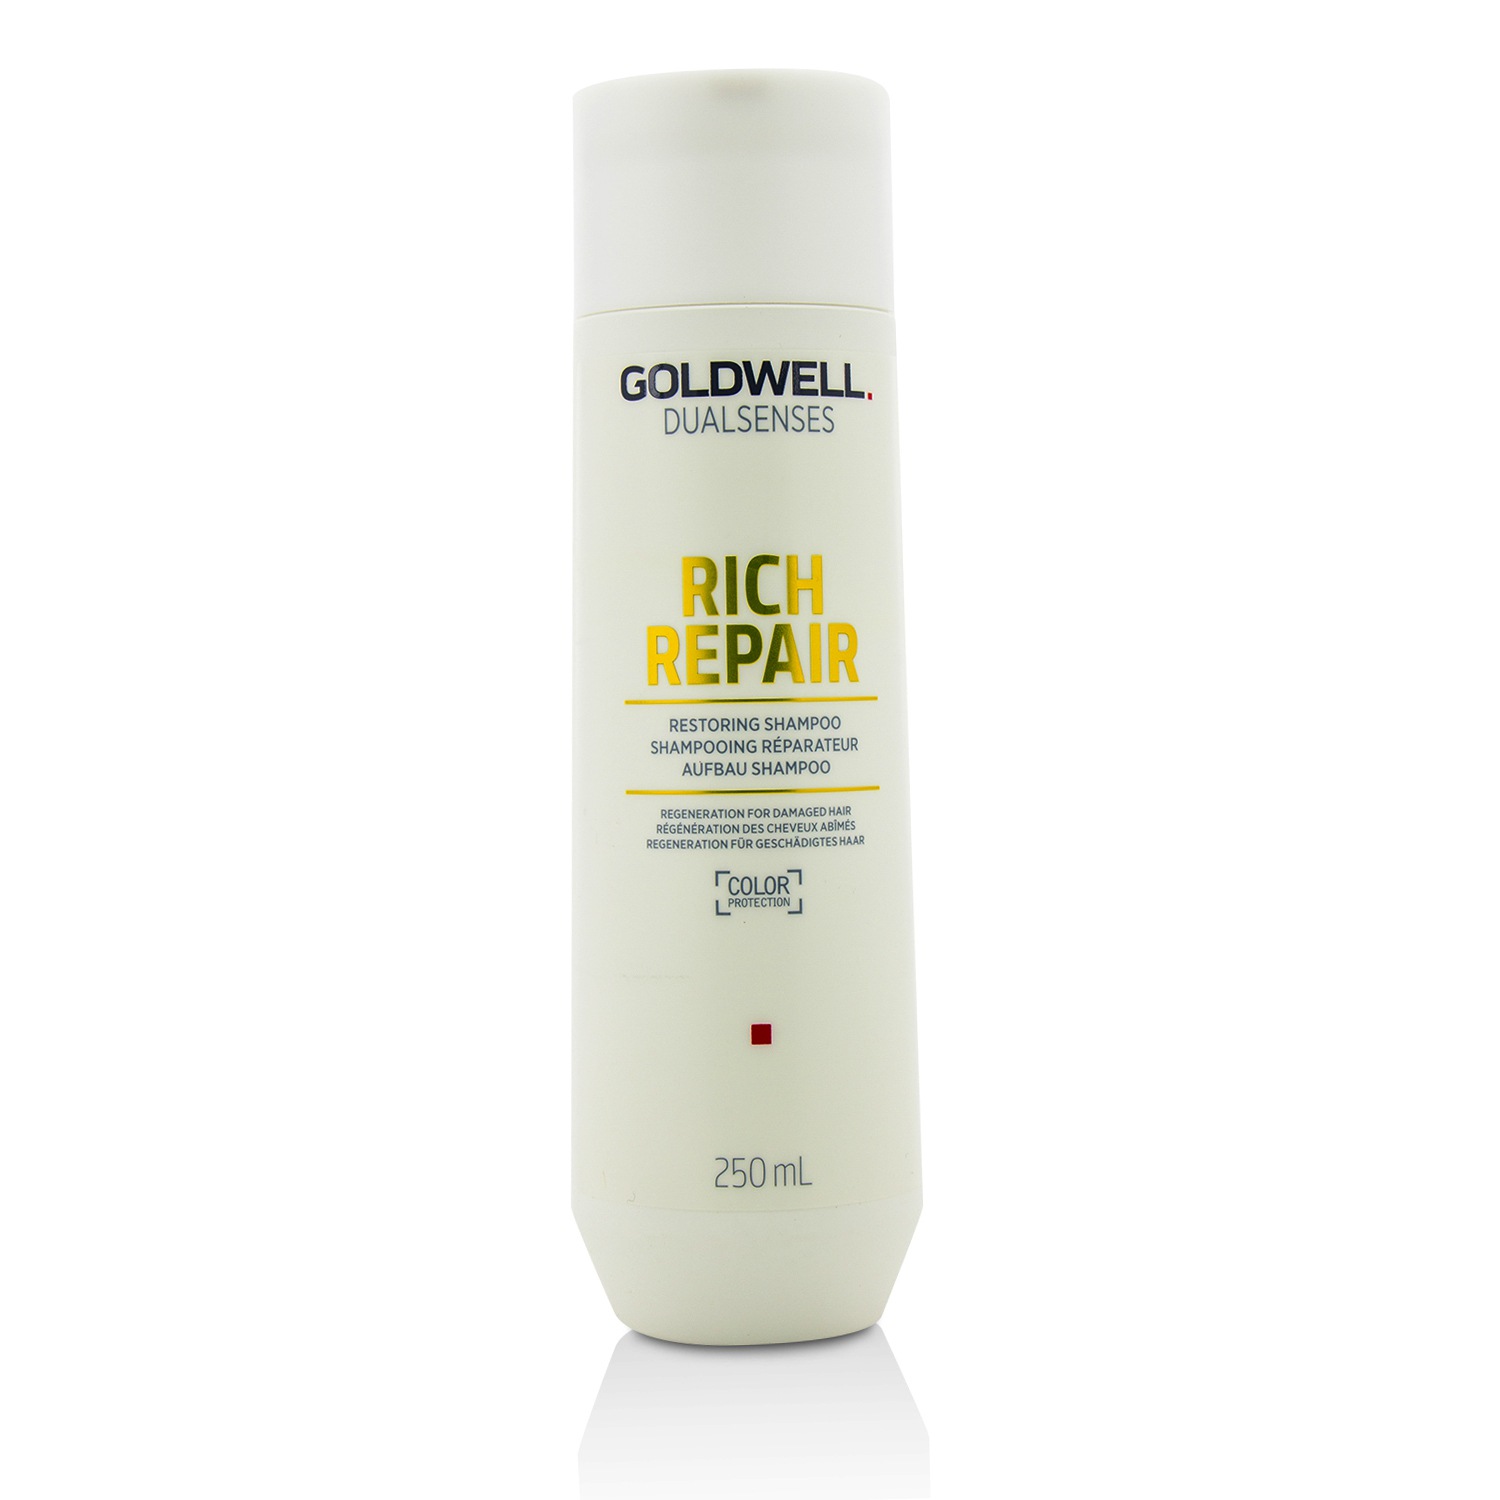 Dual Senses Rich Repair Restoring Shampoo (Regeneration For Damaged Hair) Goldwell Image